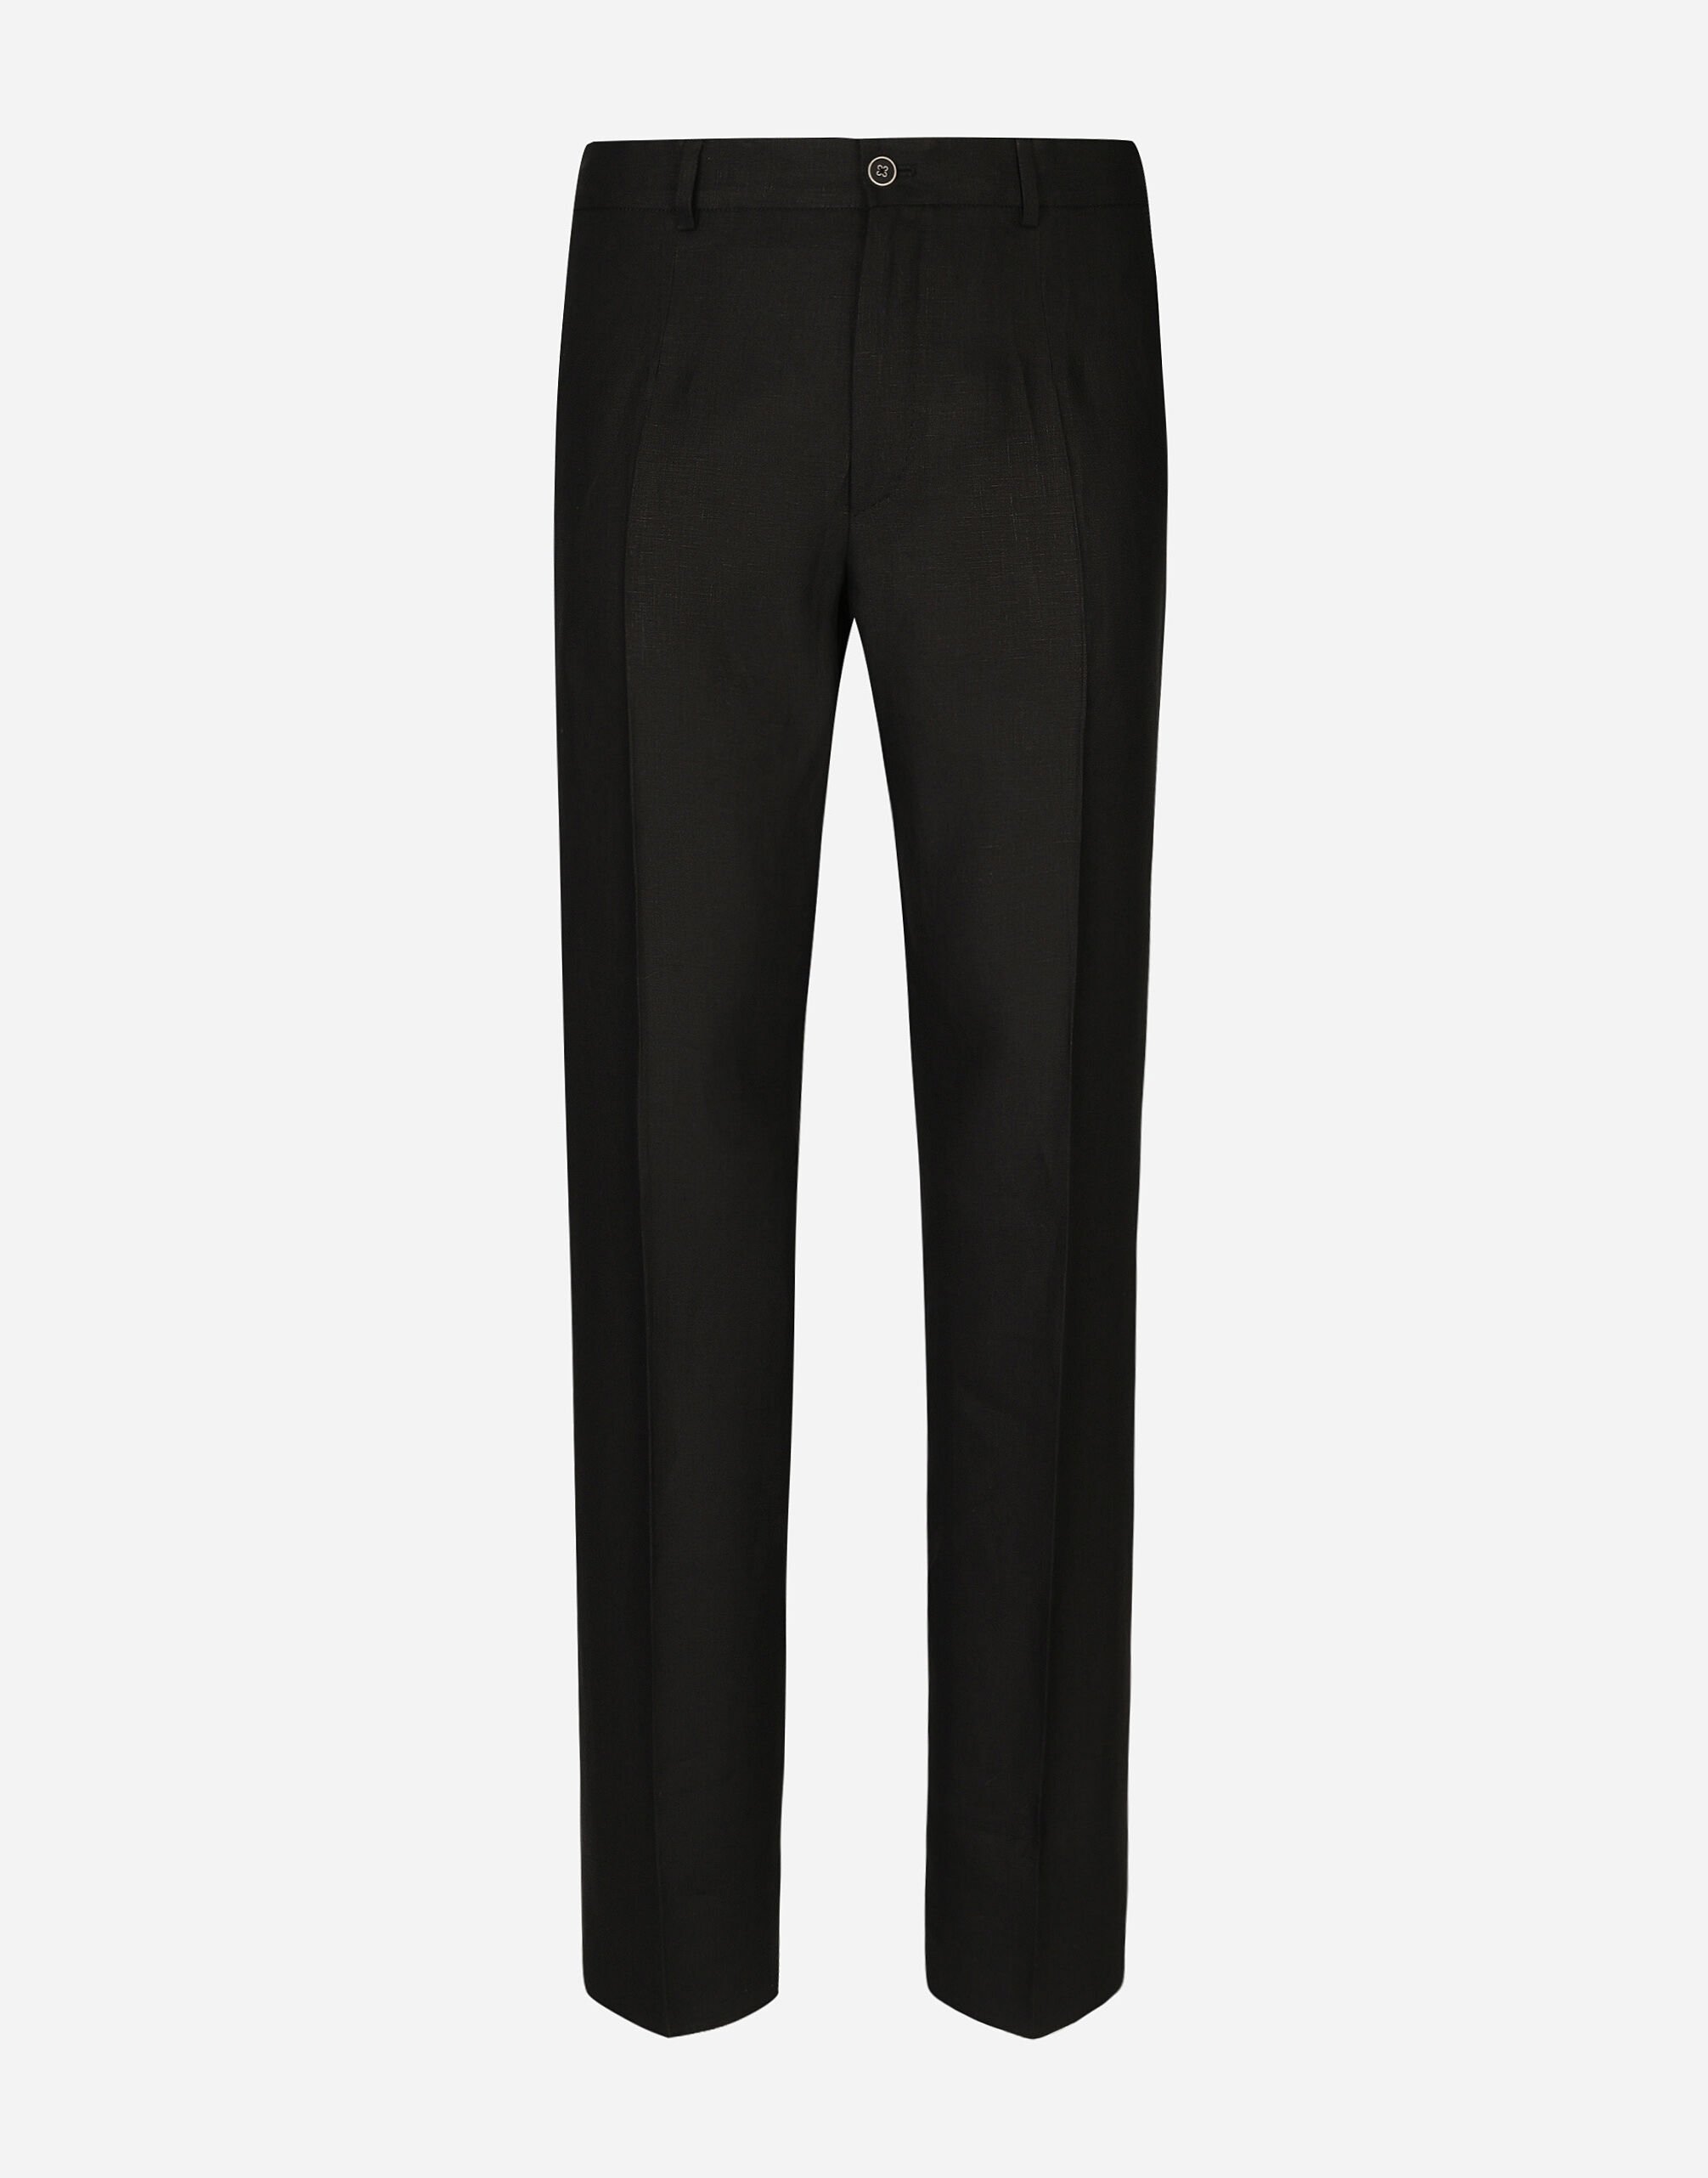 Dolce & Gabbana Tailored stretch cotton pants Black GV5TATGH253